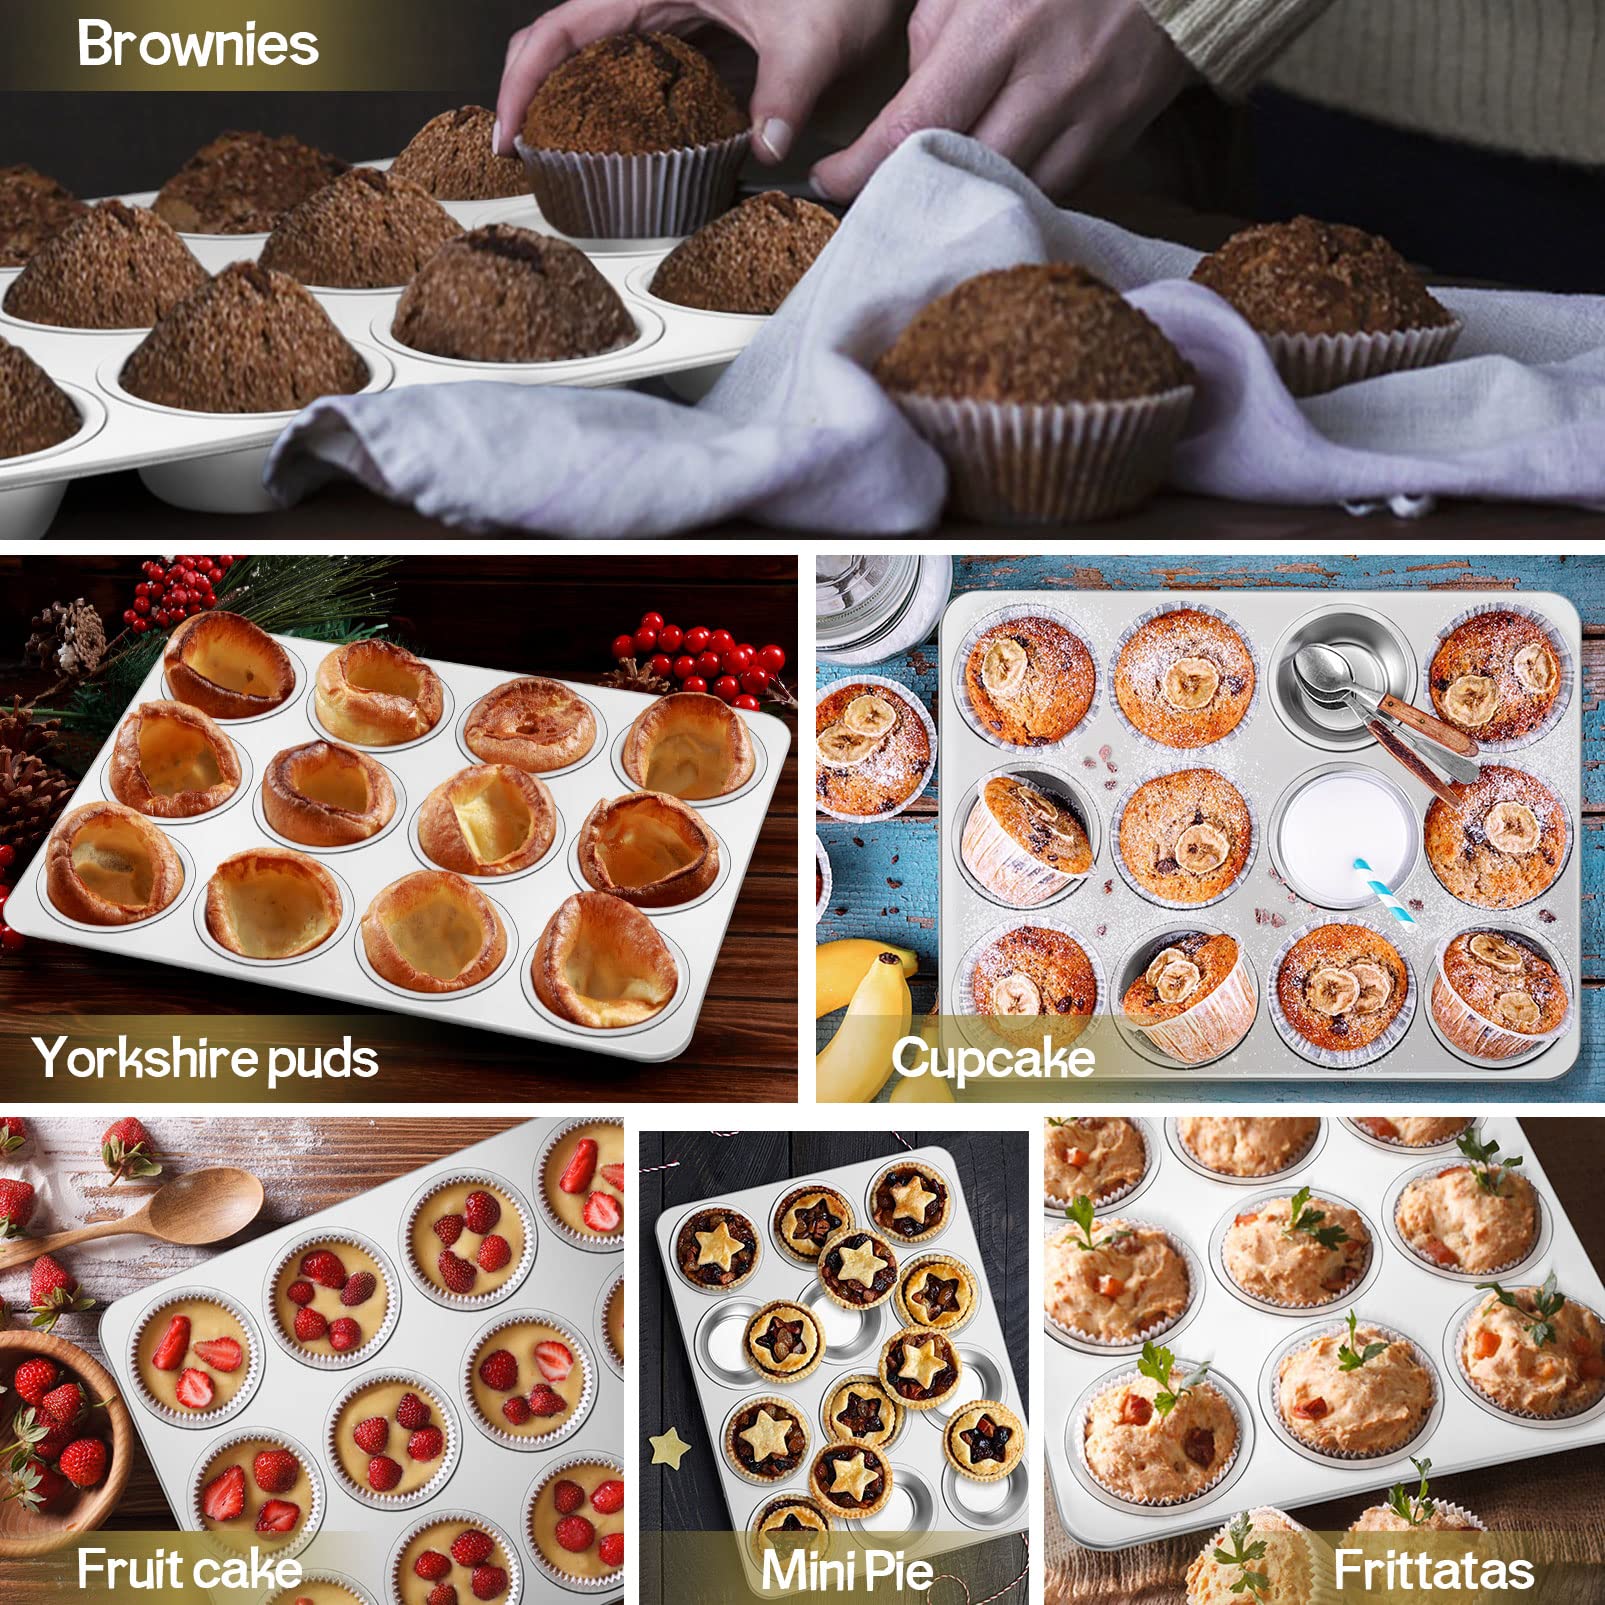 TeamFar 12-Cup Muffin Pan, Stainless Steel Cupcake Pans Muffin Tin Set for Oven Baking Mini Brownies Quiches Tarts, Non Toxic & Regular Size, Dishwasher Safe – Set of 2